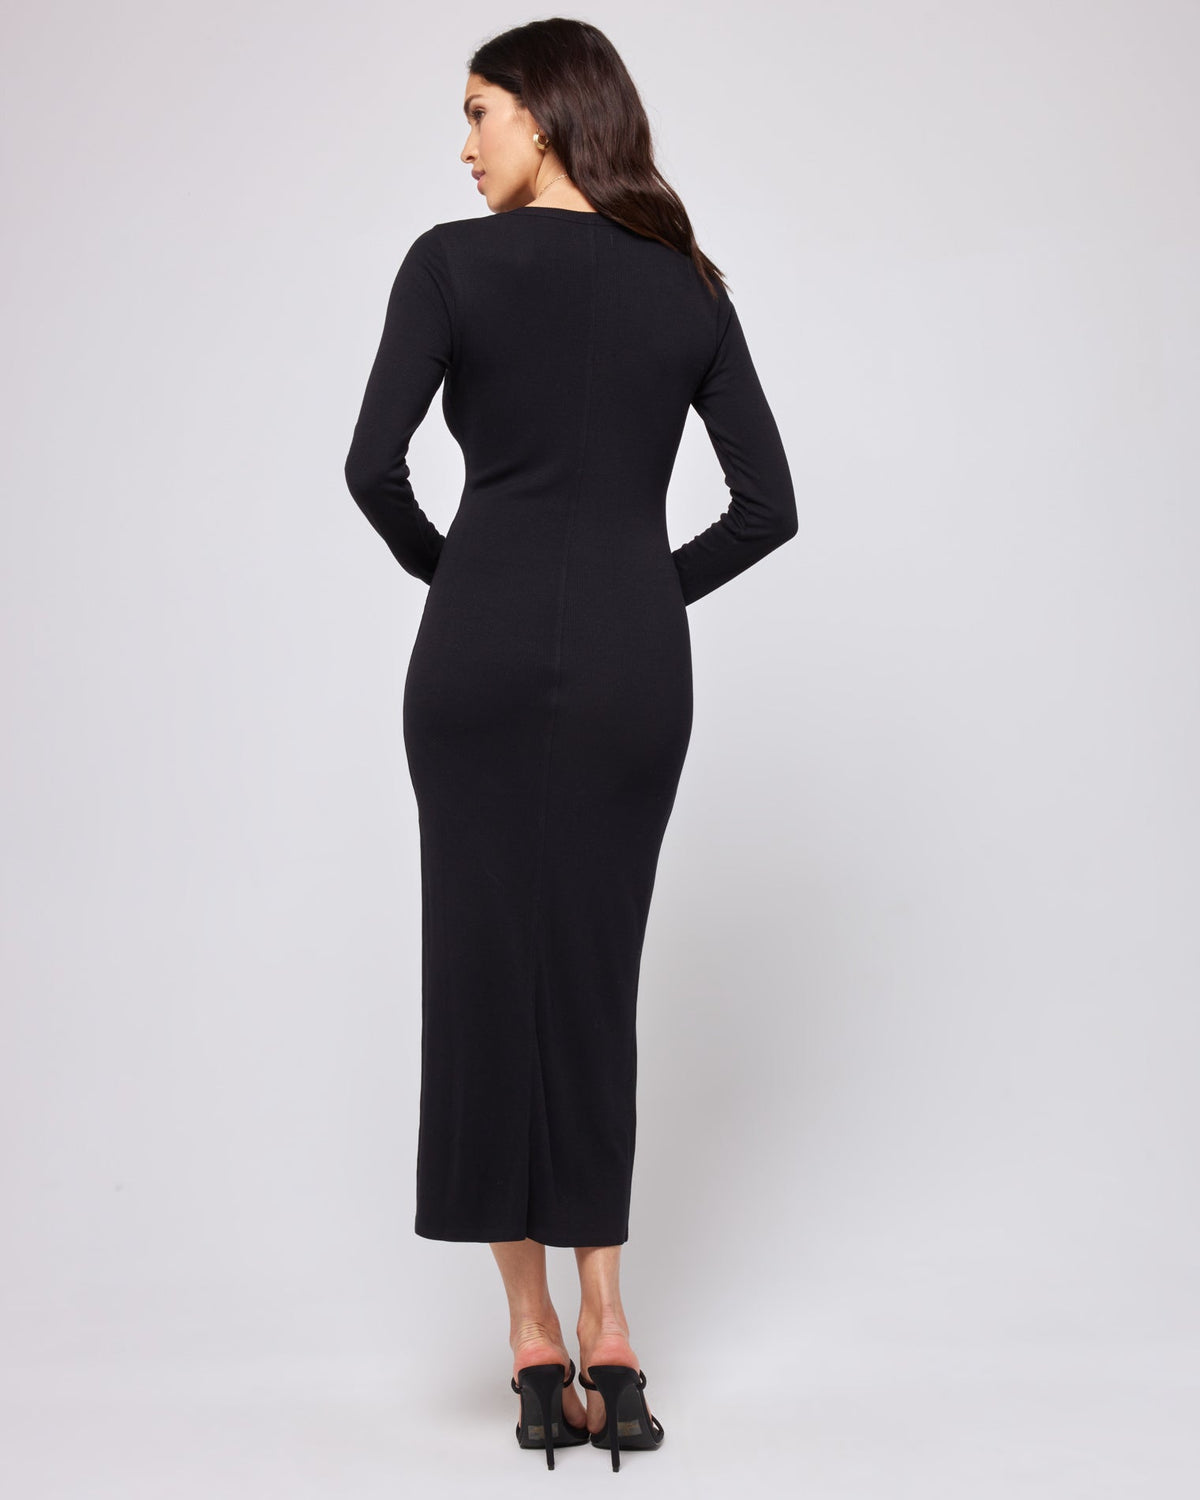 Eloise Dress - Black Black | Model: Julianna (size: S)